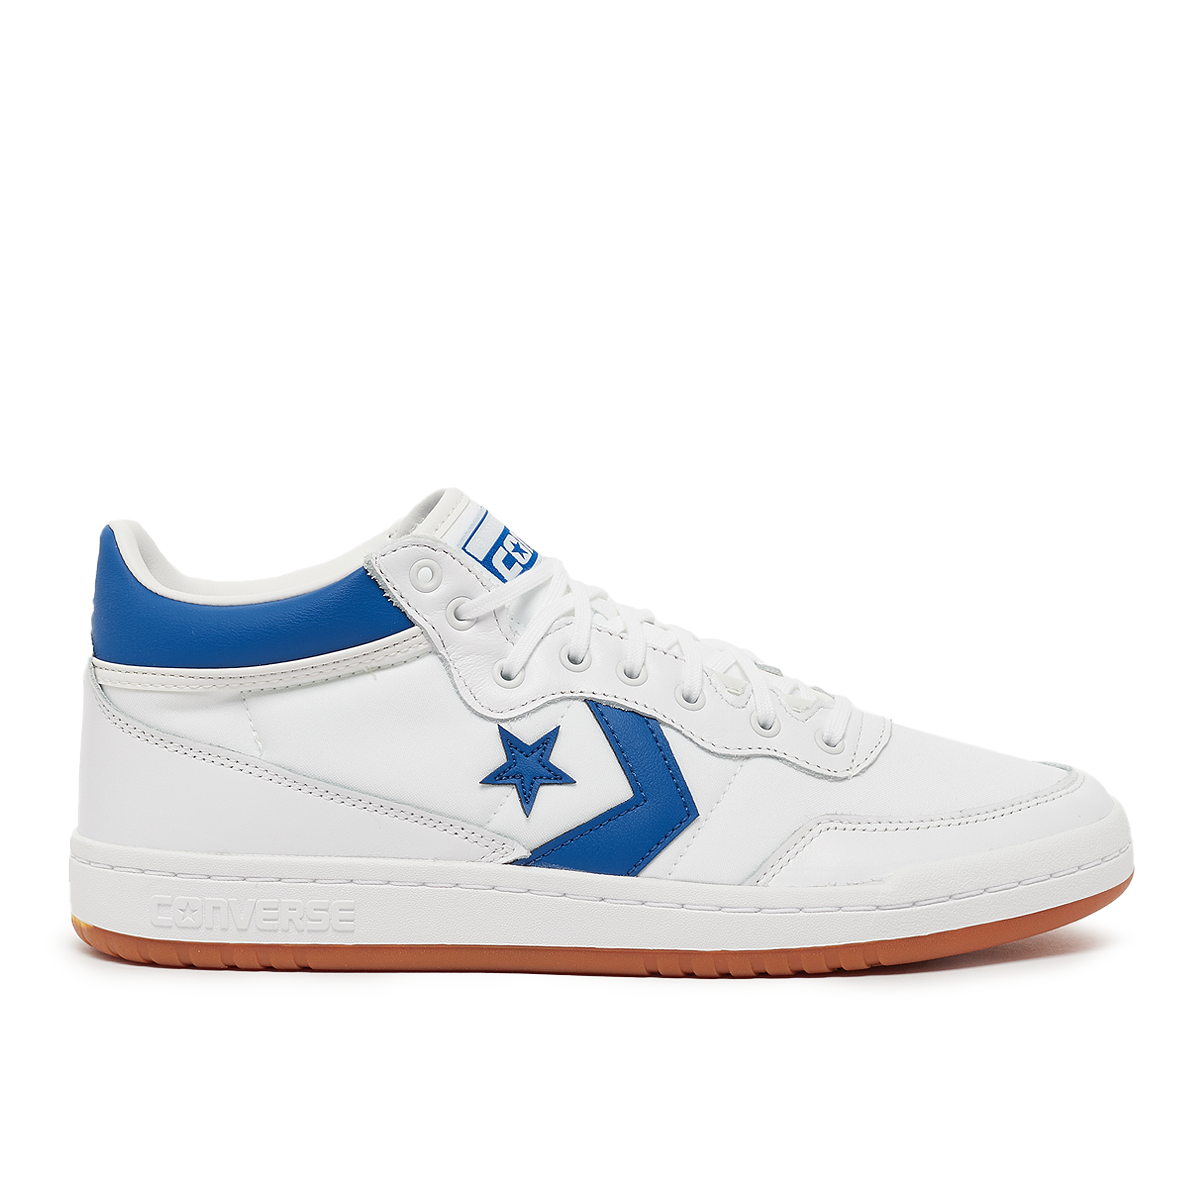 Converse Fastbreak Pro Sneakers in White/Blue - A09867C